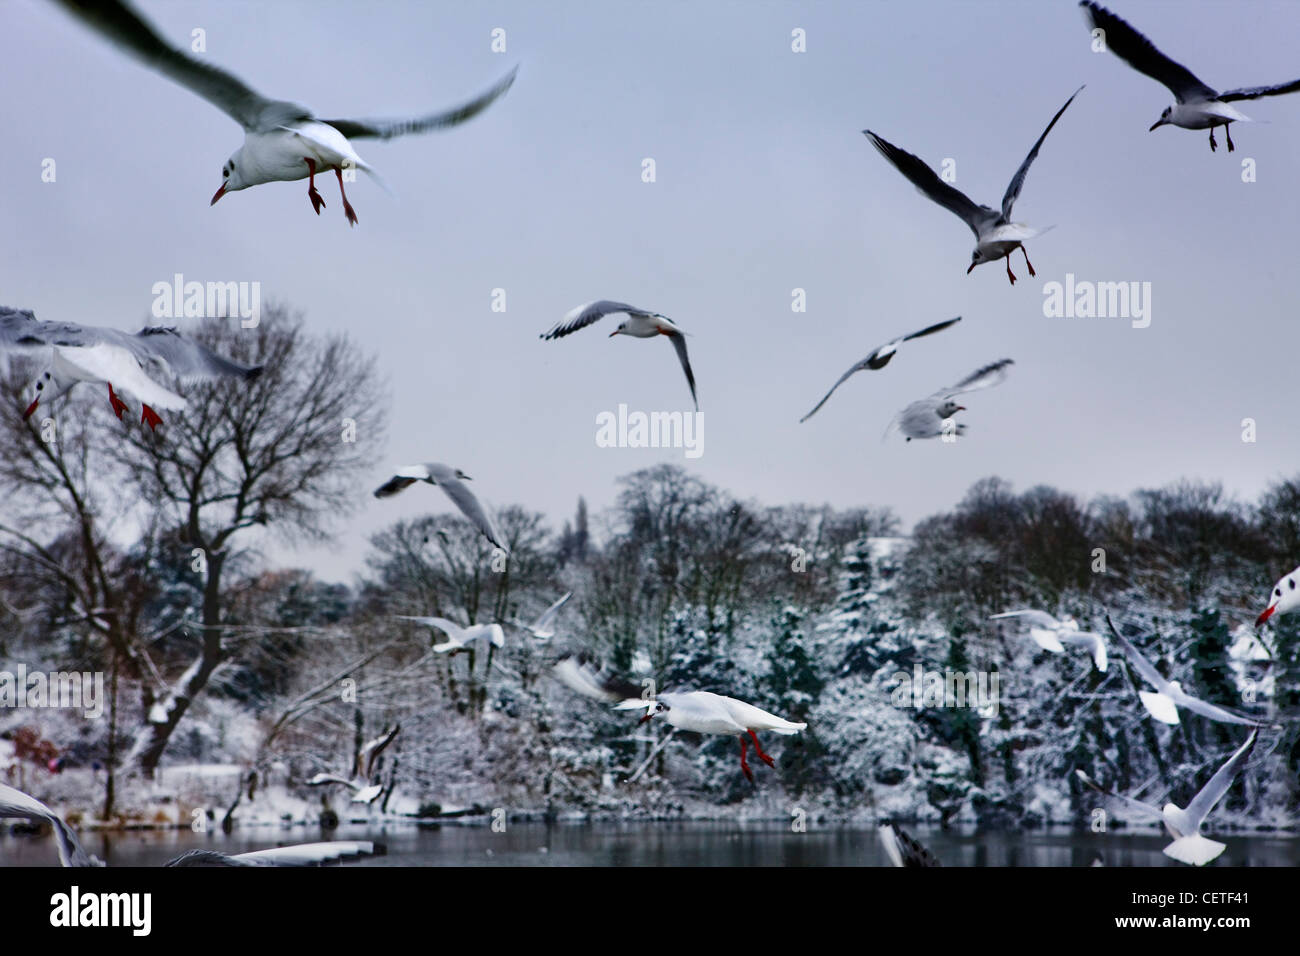 Seagulls flying over Hampstead Heath ponds in winter, London, En gland Stock Photo